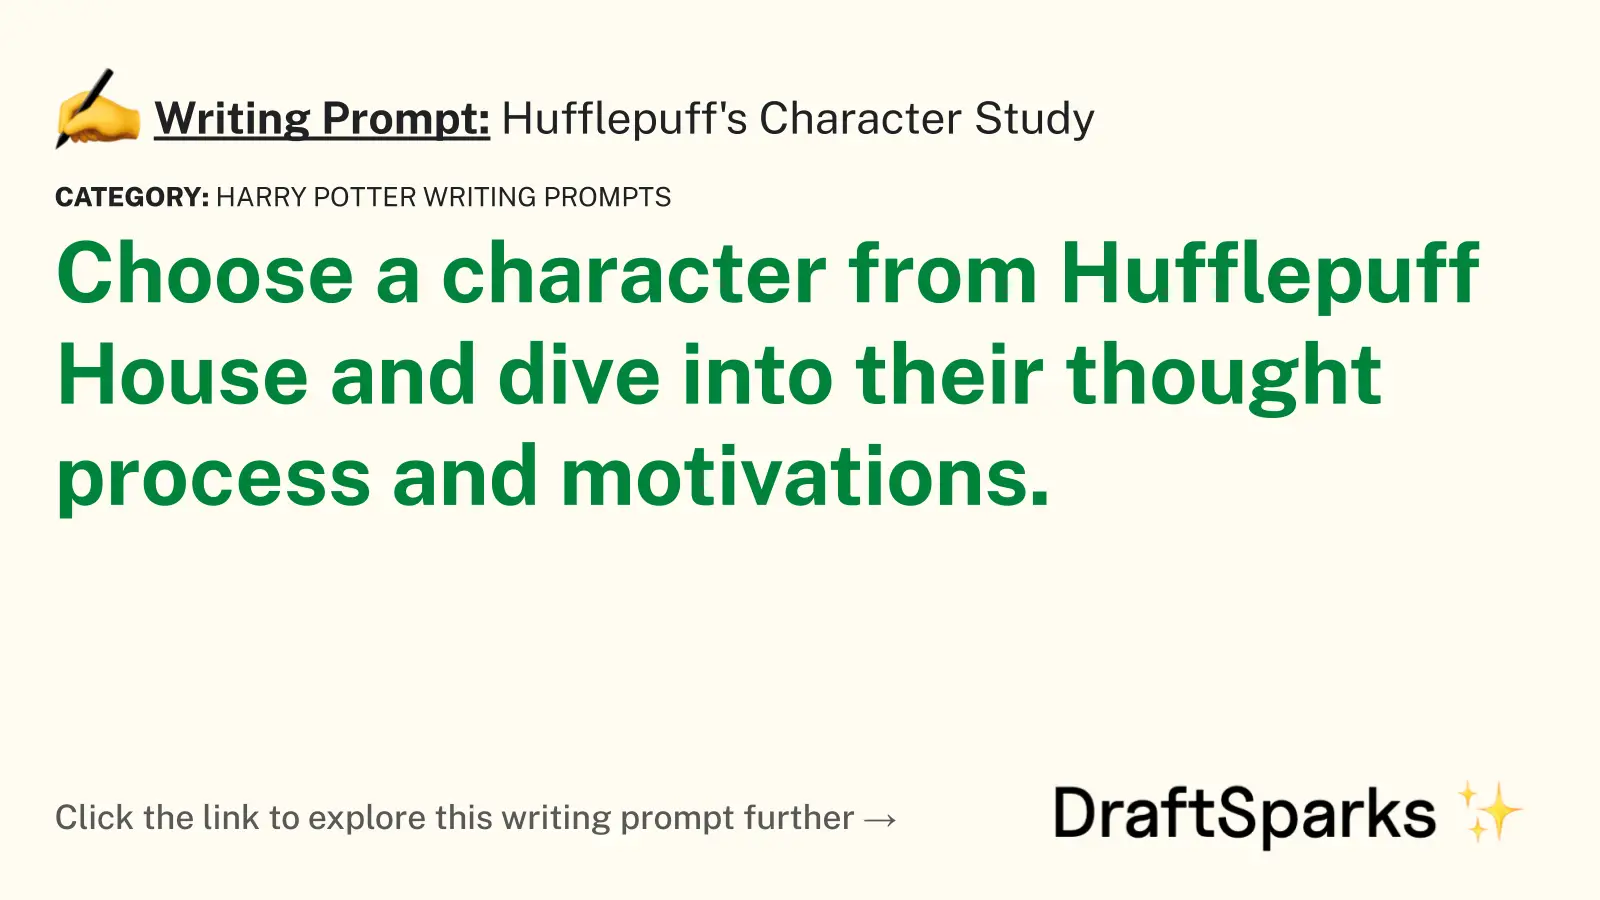 Hufflepuff’s Character Study